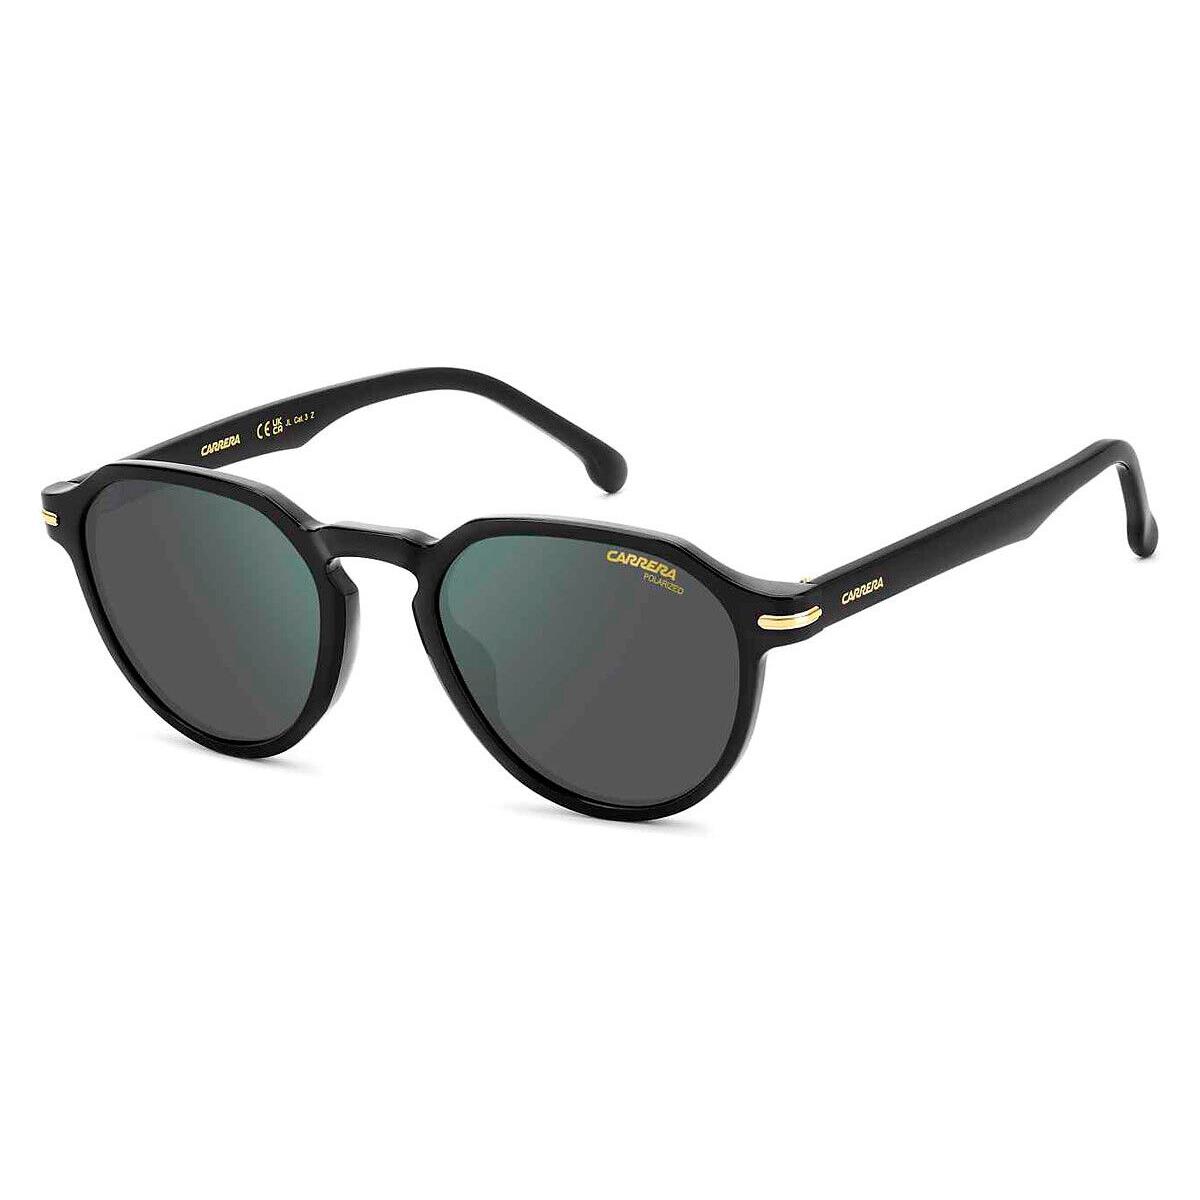 Carrera Car Sunglasses Black / Green Gray Polarized HC AR